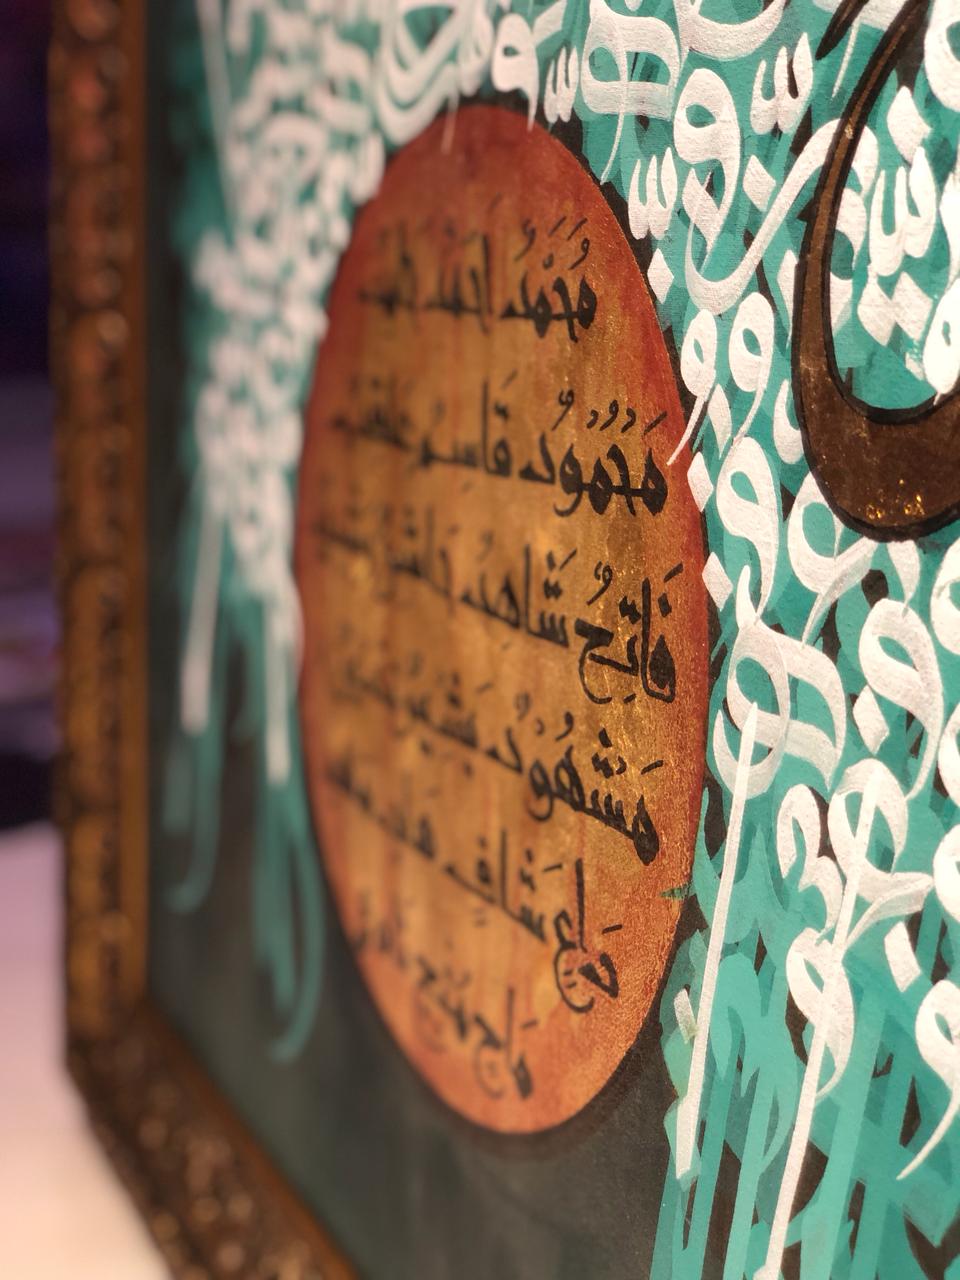 Islamic Calligraphy painting - wall art